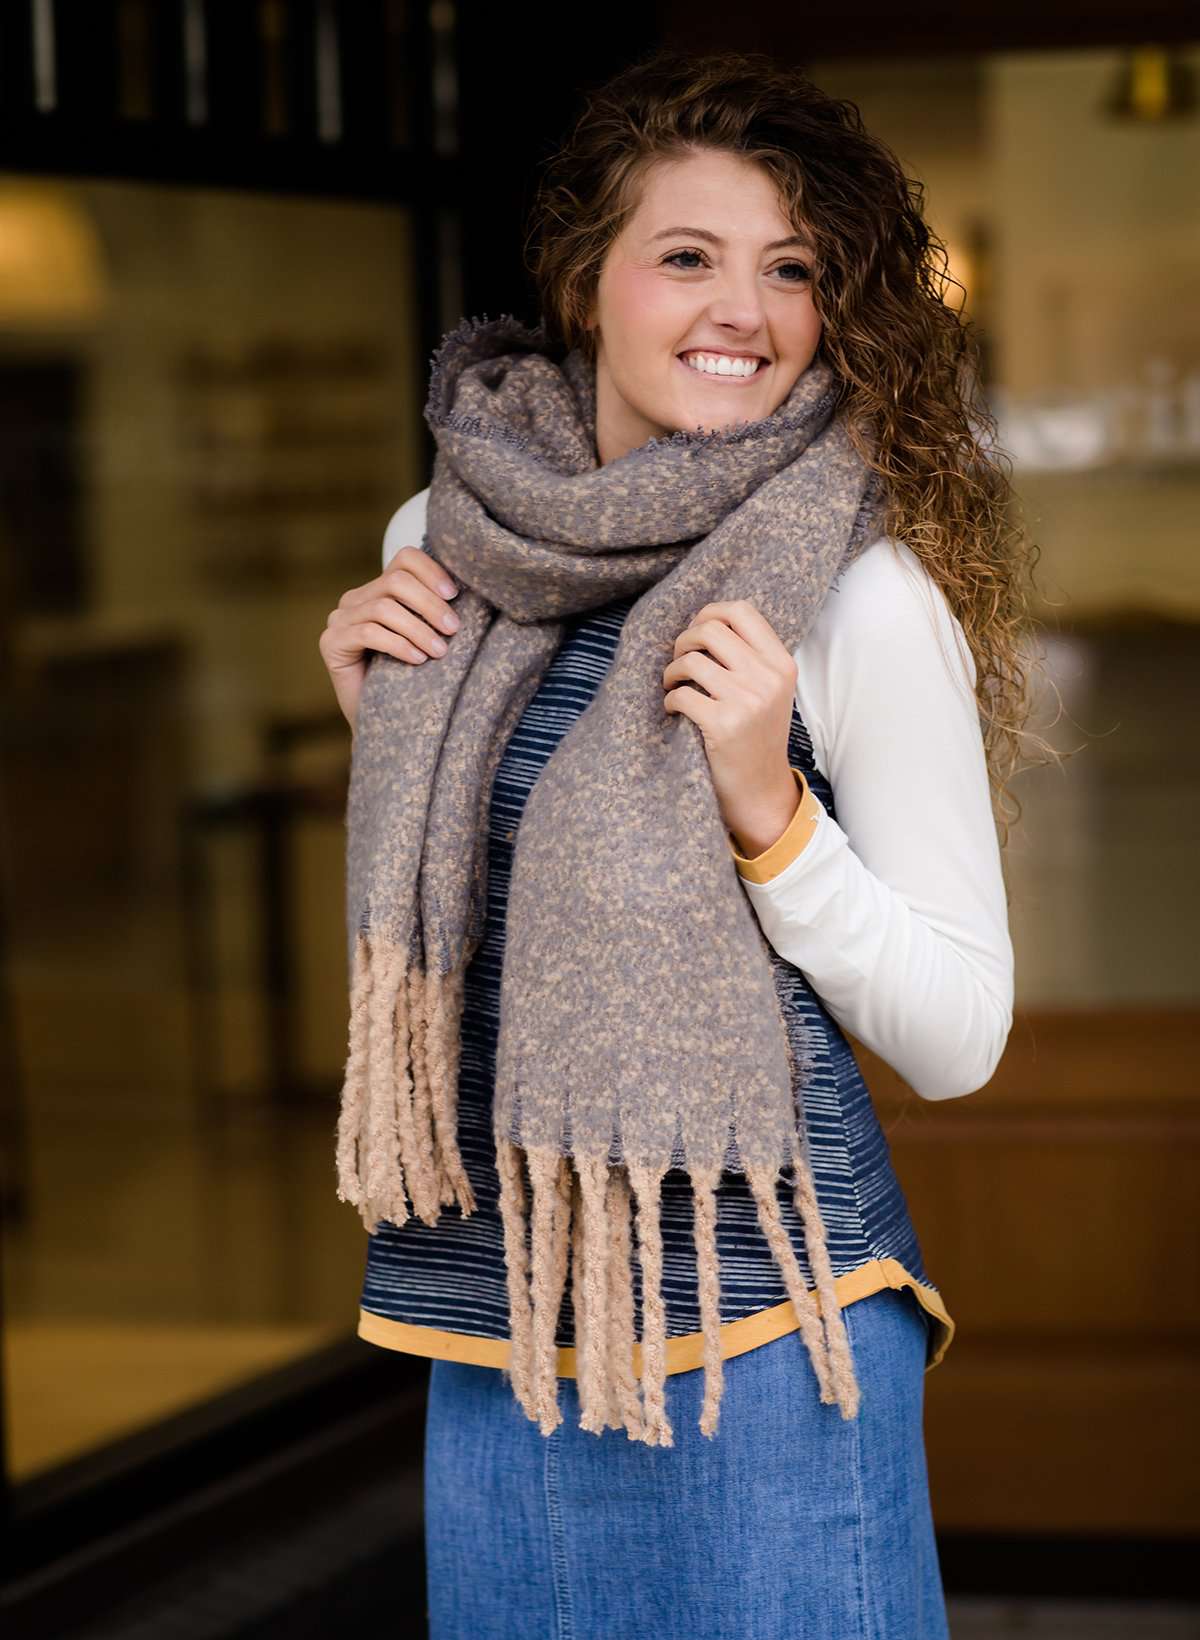 Women's modest fringe taupe scarf